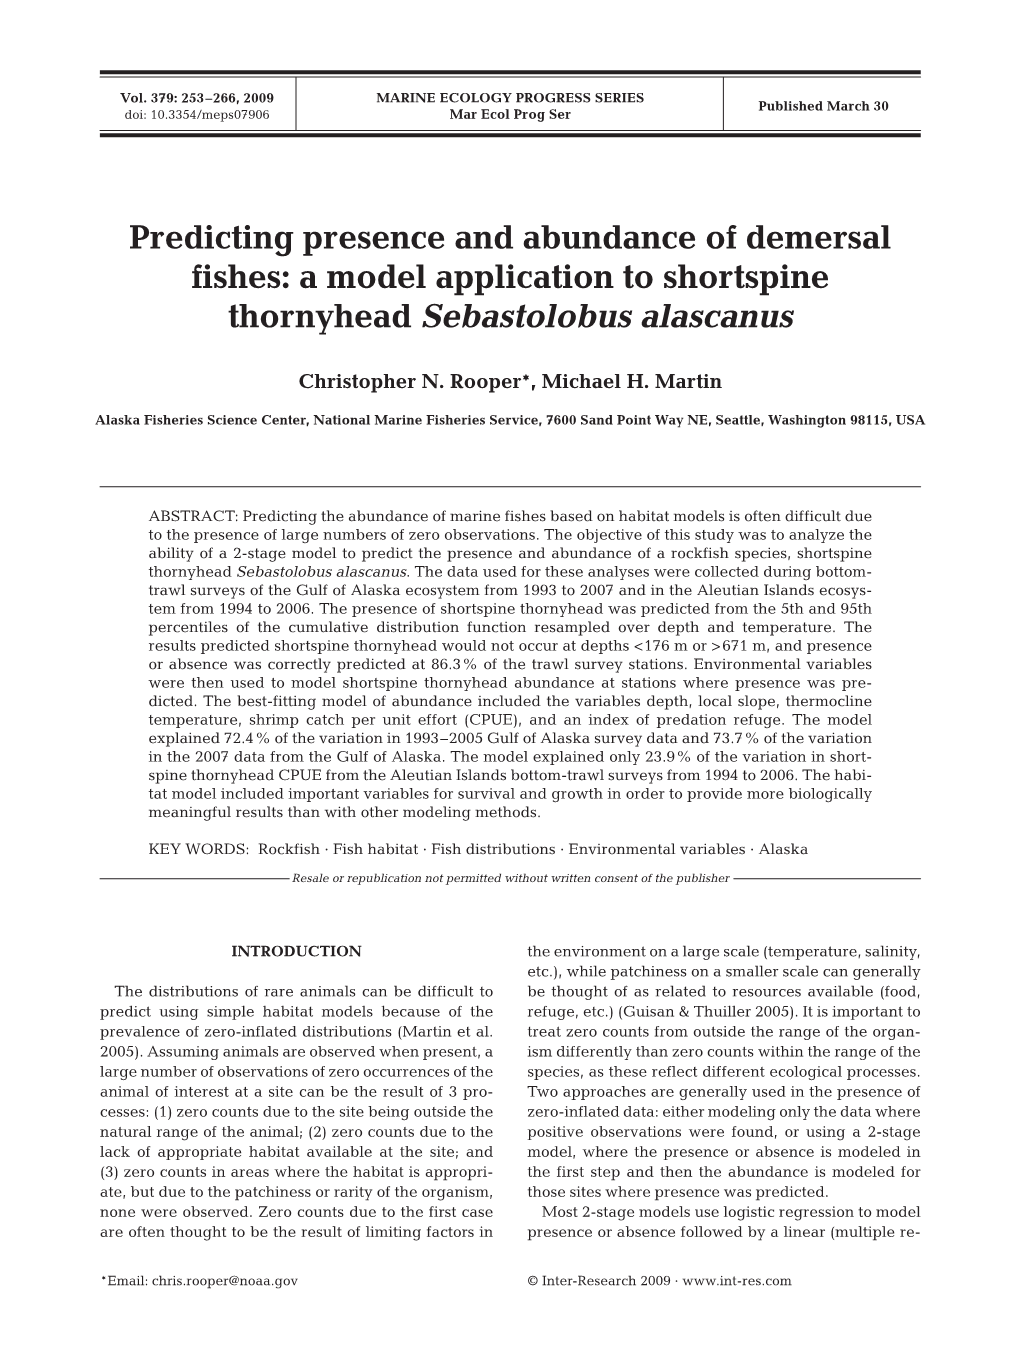 Predicting Presence and Abundance of Demersal Fishes: a Model Application to Shortspine Thornyhead Sebastolobus Alascanus